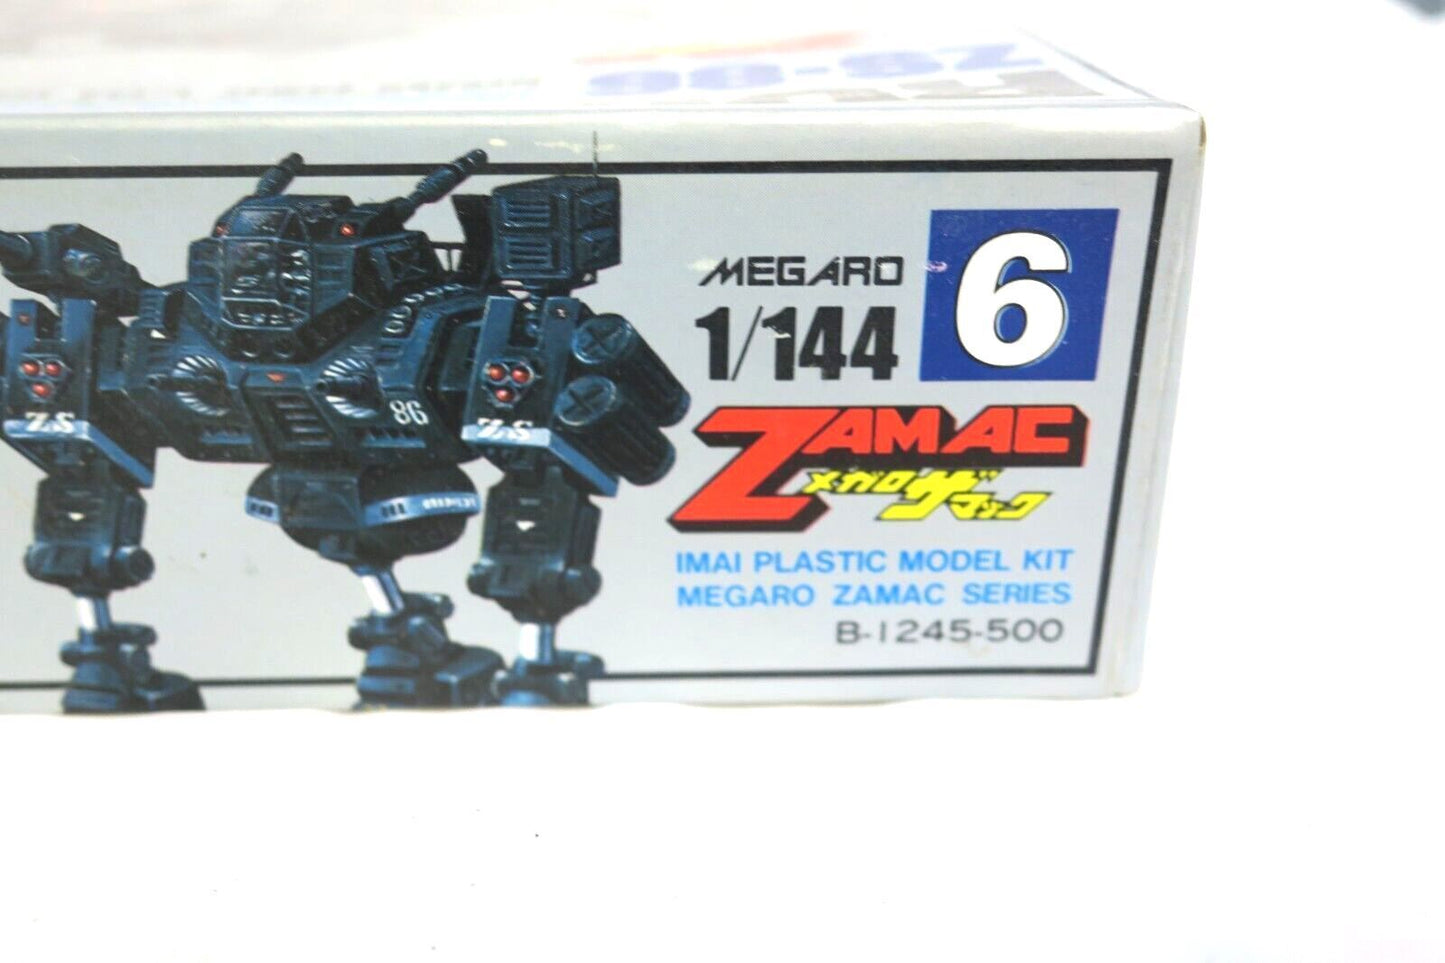 IMAI Zamac 1/144  ZS-86 'Run-Valam' Plastic Kit MEGARO ZAMAC SERIES B-1245-500